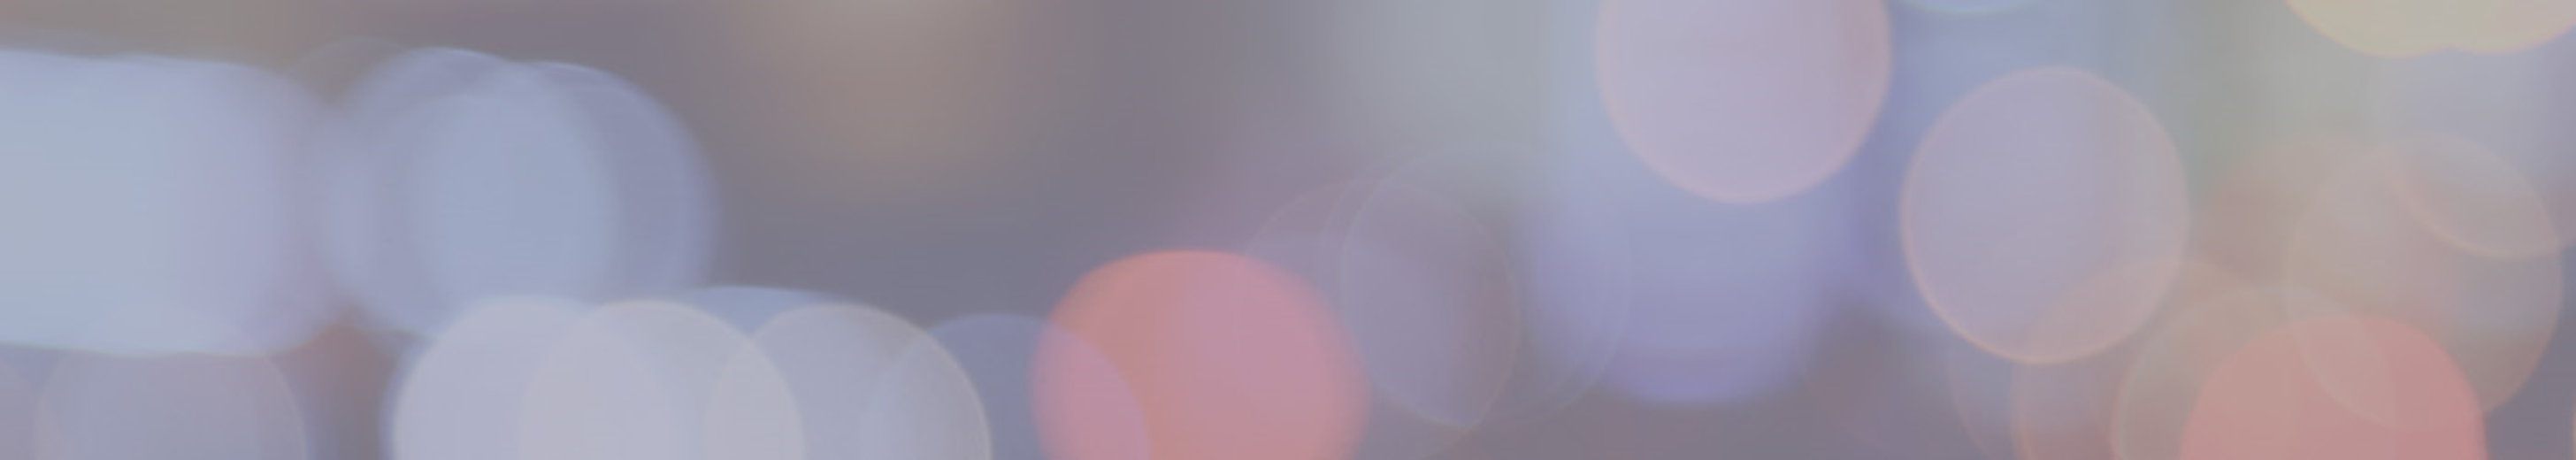 Blurred multicoloured image